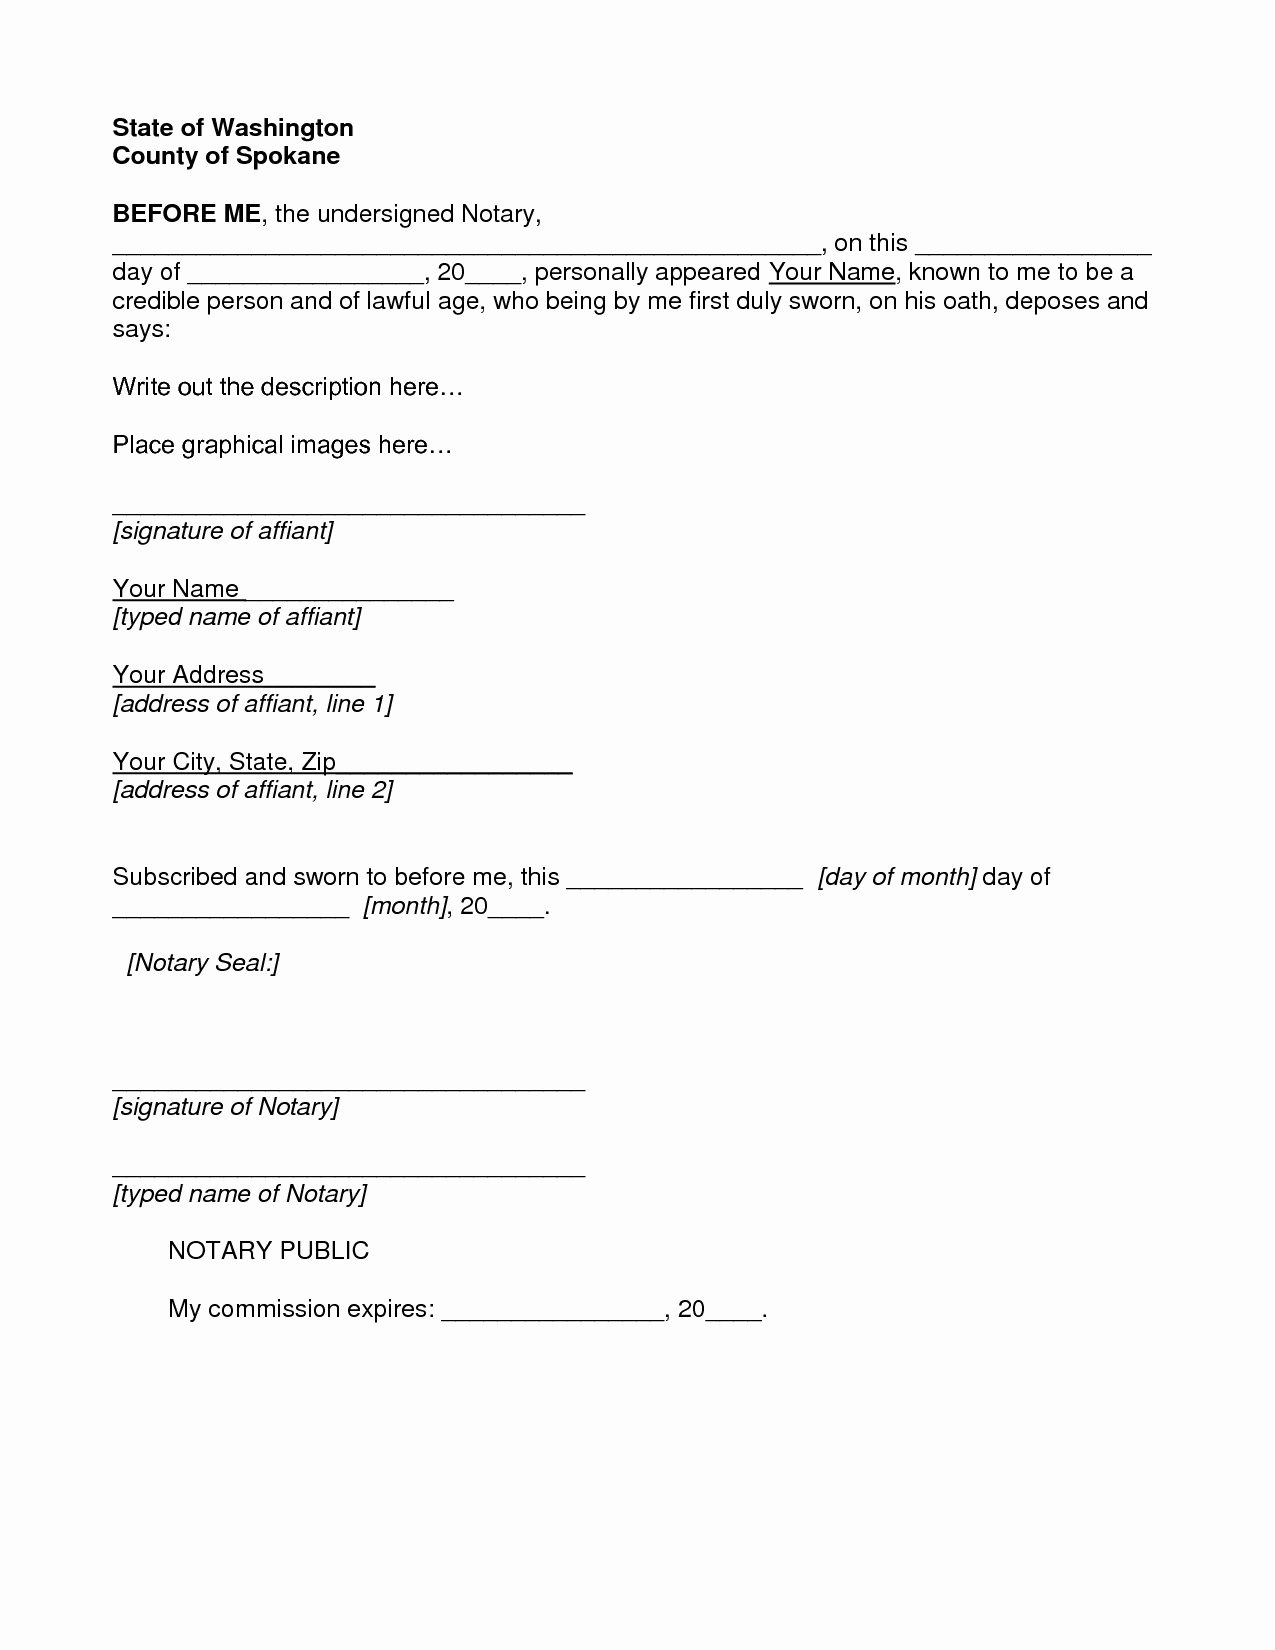 notary-signature-block-template